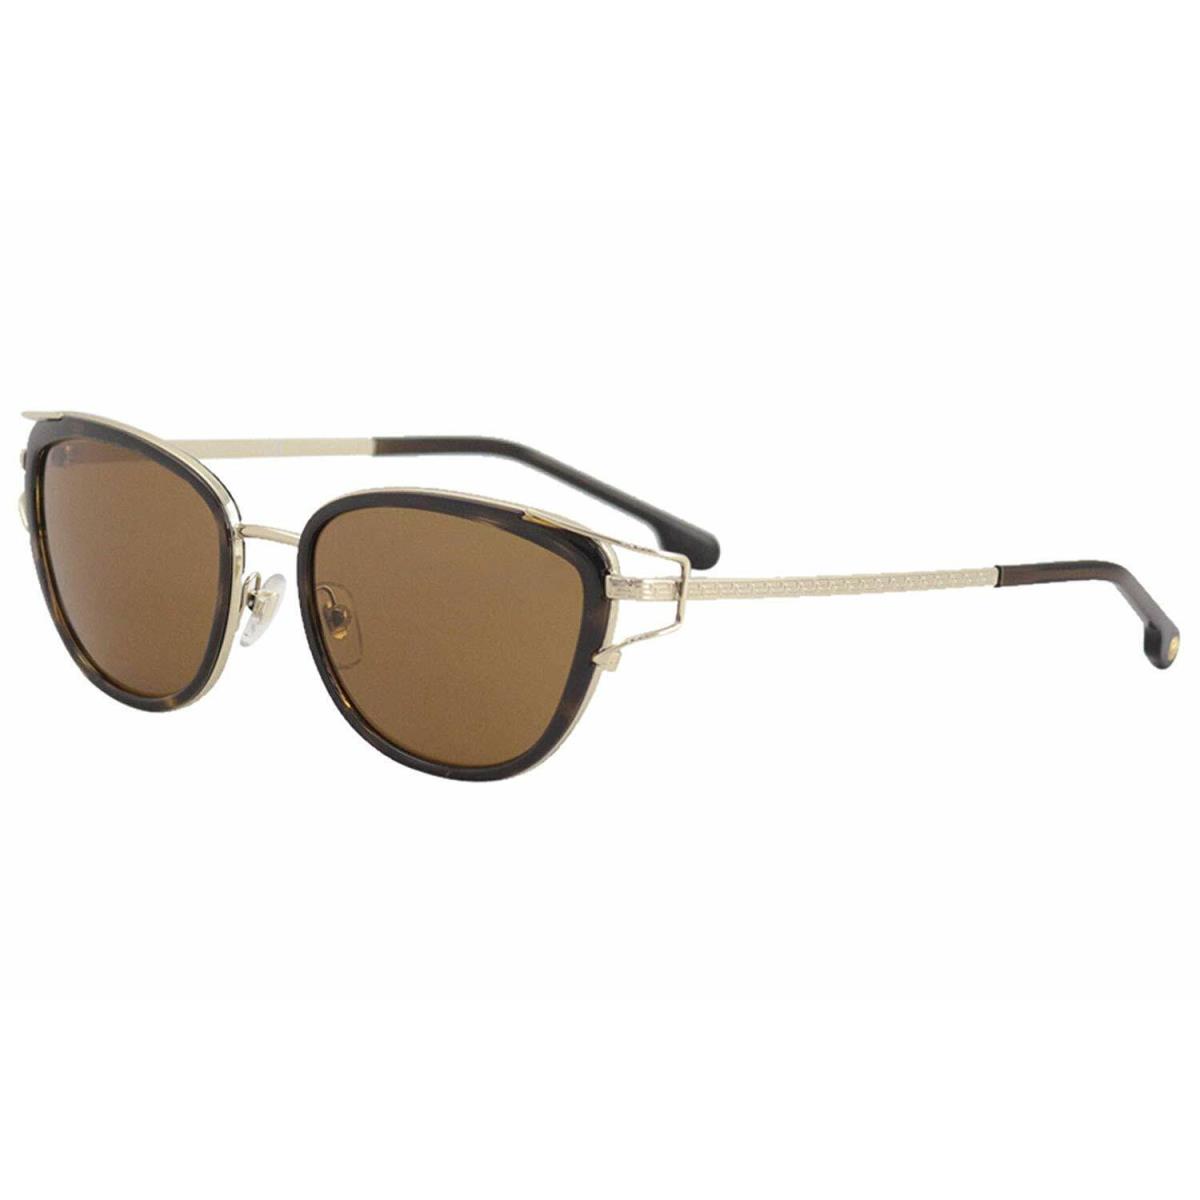 Versace Sunglasses VE2203 144073 53mm Havana Pale Gold / Brown Lens